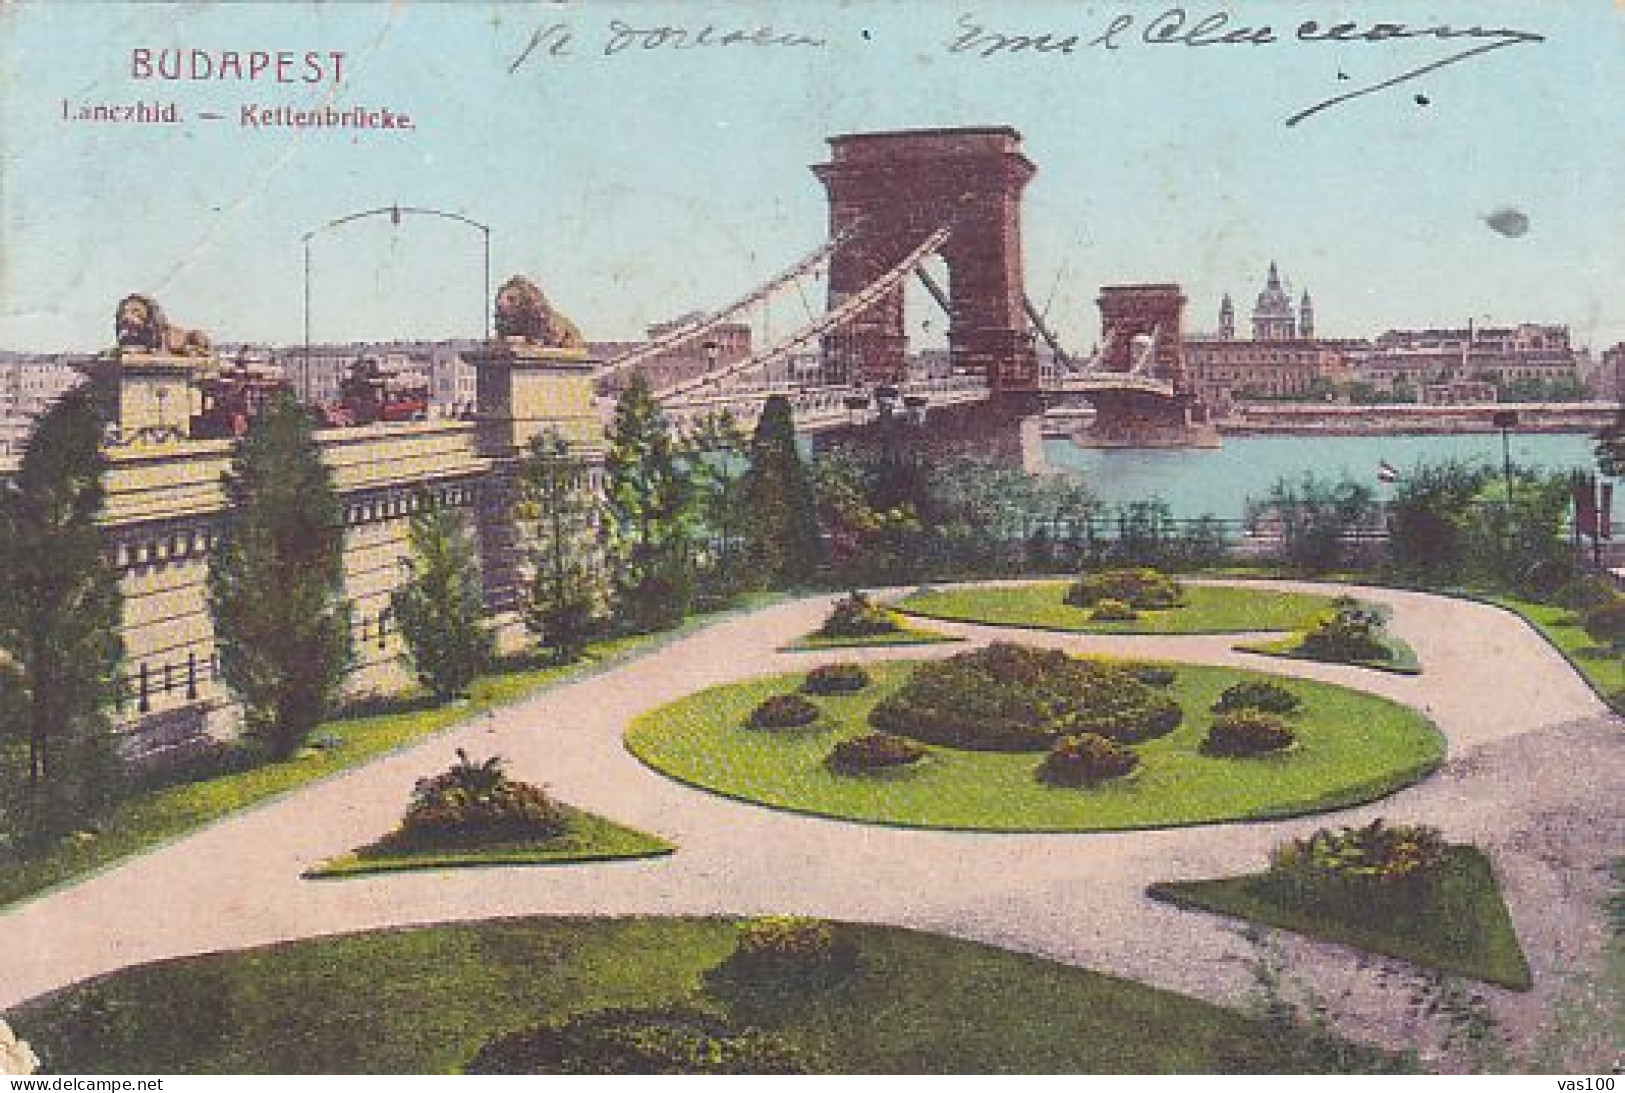 POSTAGE DUE, PORTO STAMPS ON BUDAPEST CHAIN BRIDGE POSTCARD, 1907, ROMANIA - Postage Due